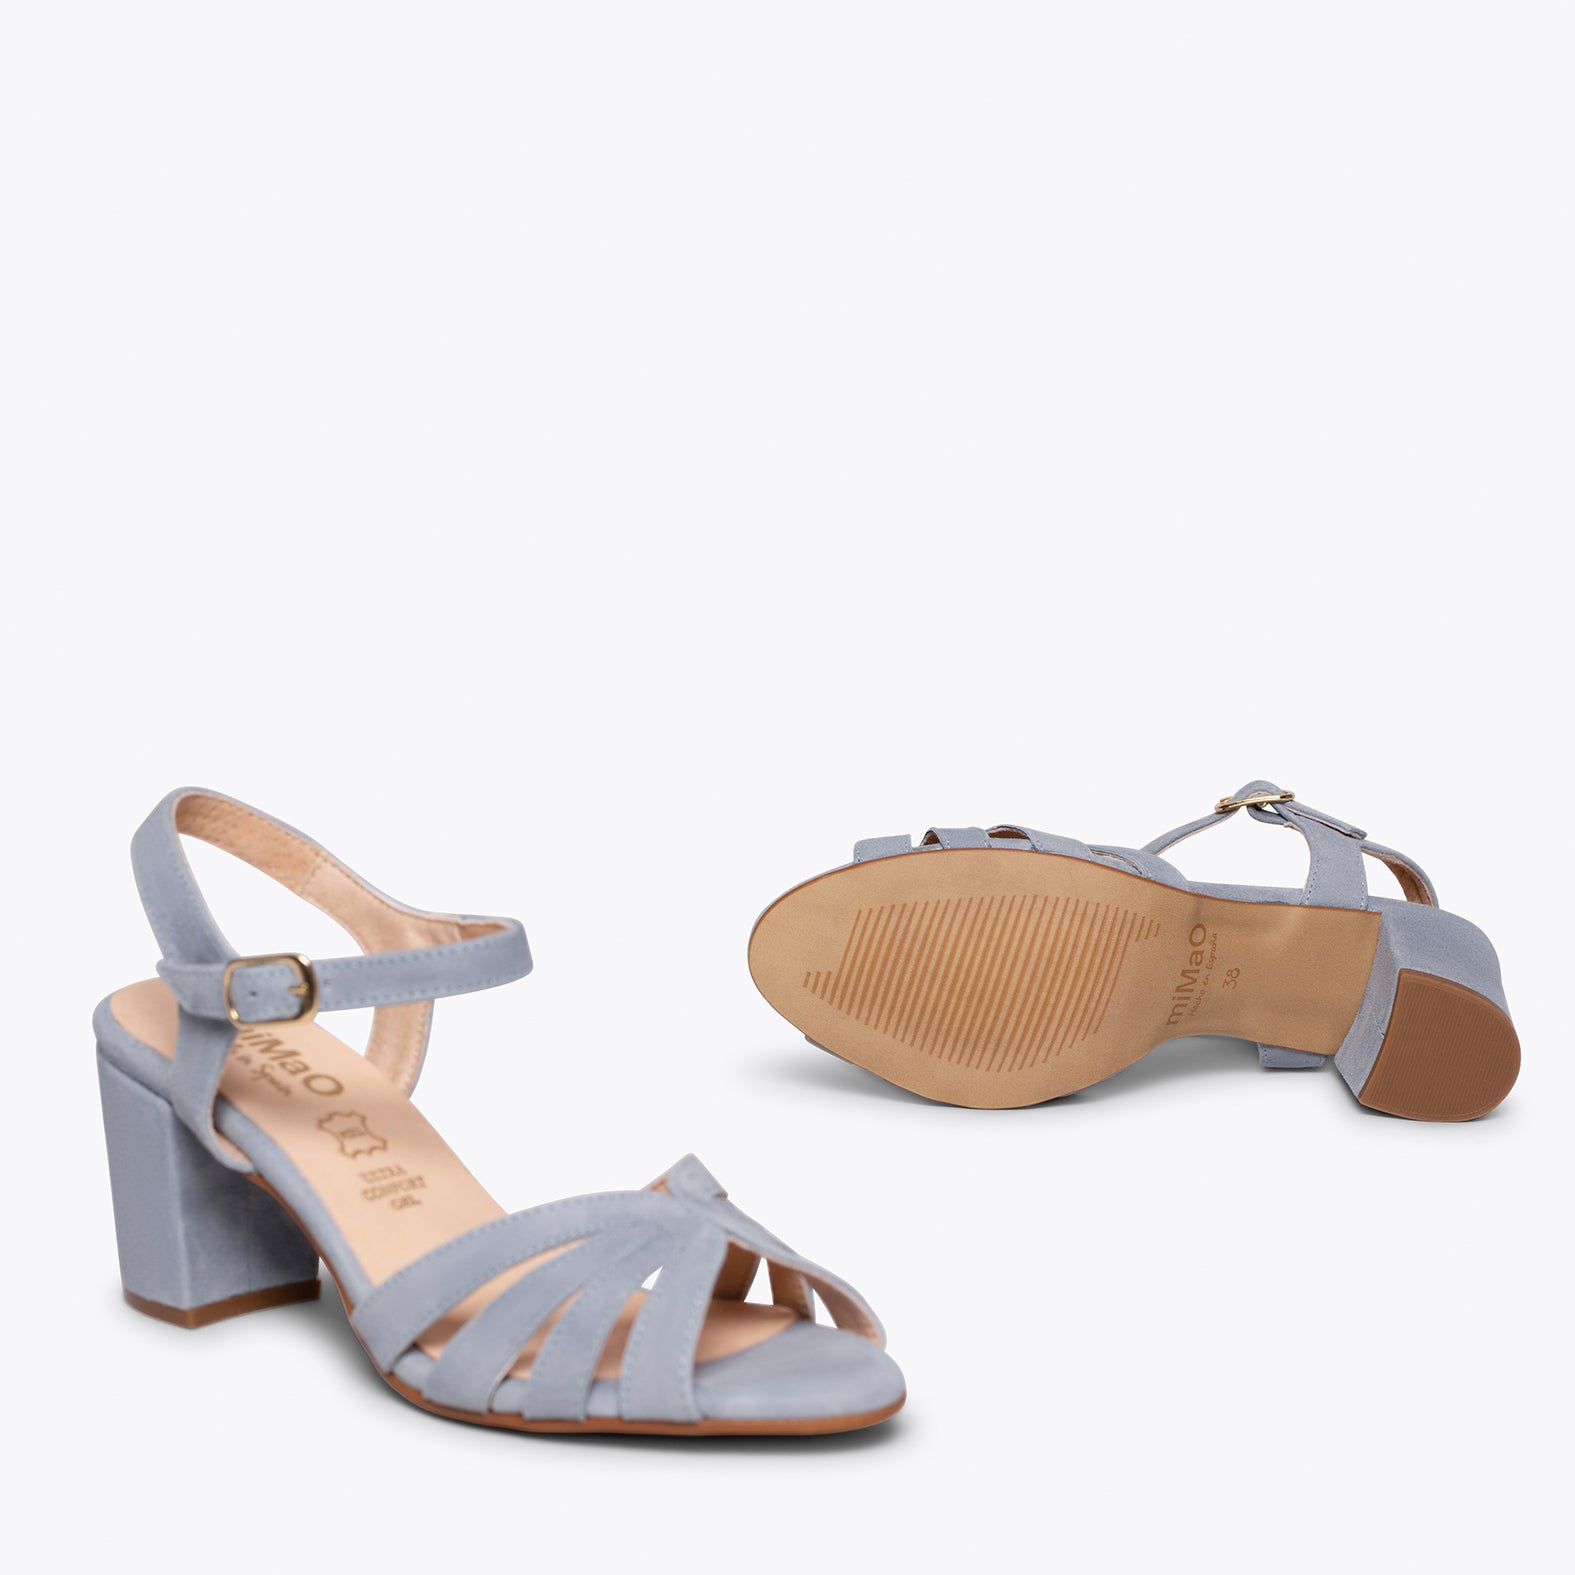 Sandalias de Mujer | Sandalias ancho | Calzado Mujer – ShopOnline